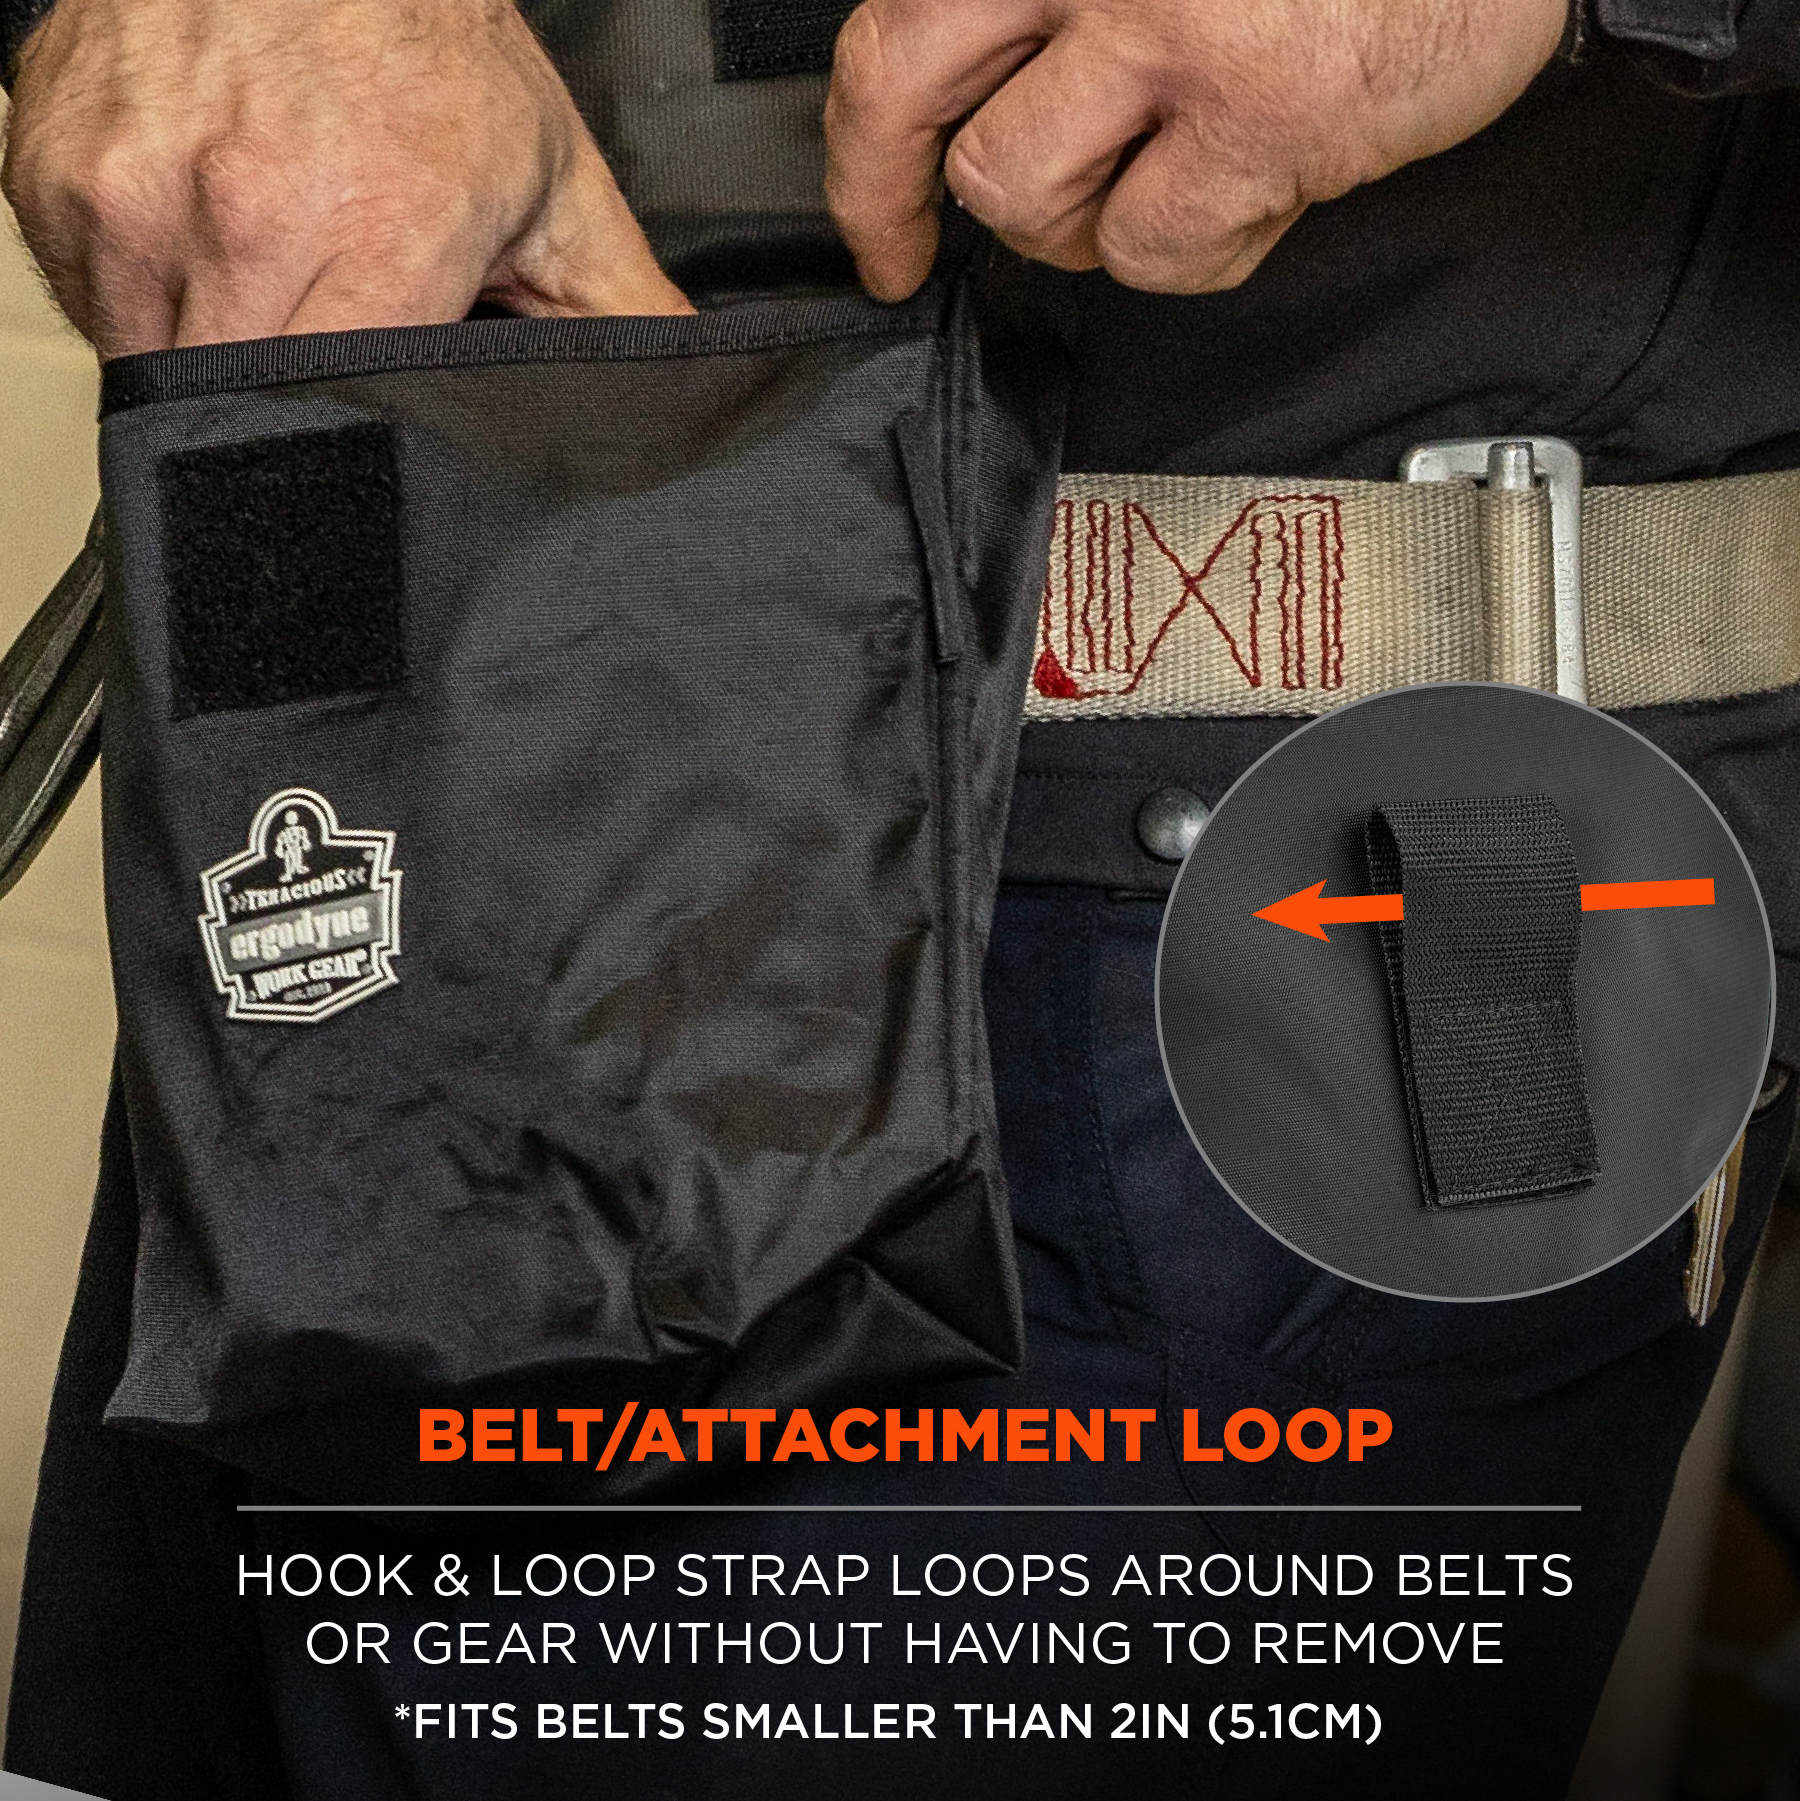 https://www.ergodyne.com/sites/default/files/product-images/13181-5181-large-full-face-respirator-bag-black-belt-attachment-loop.jpg